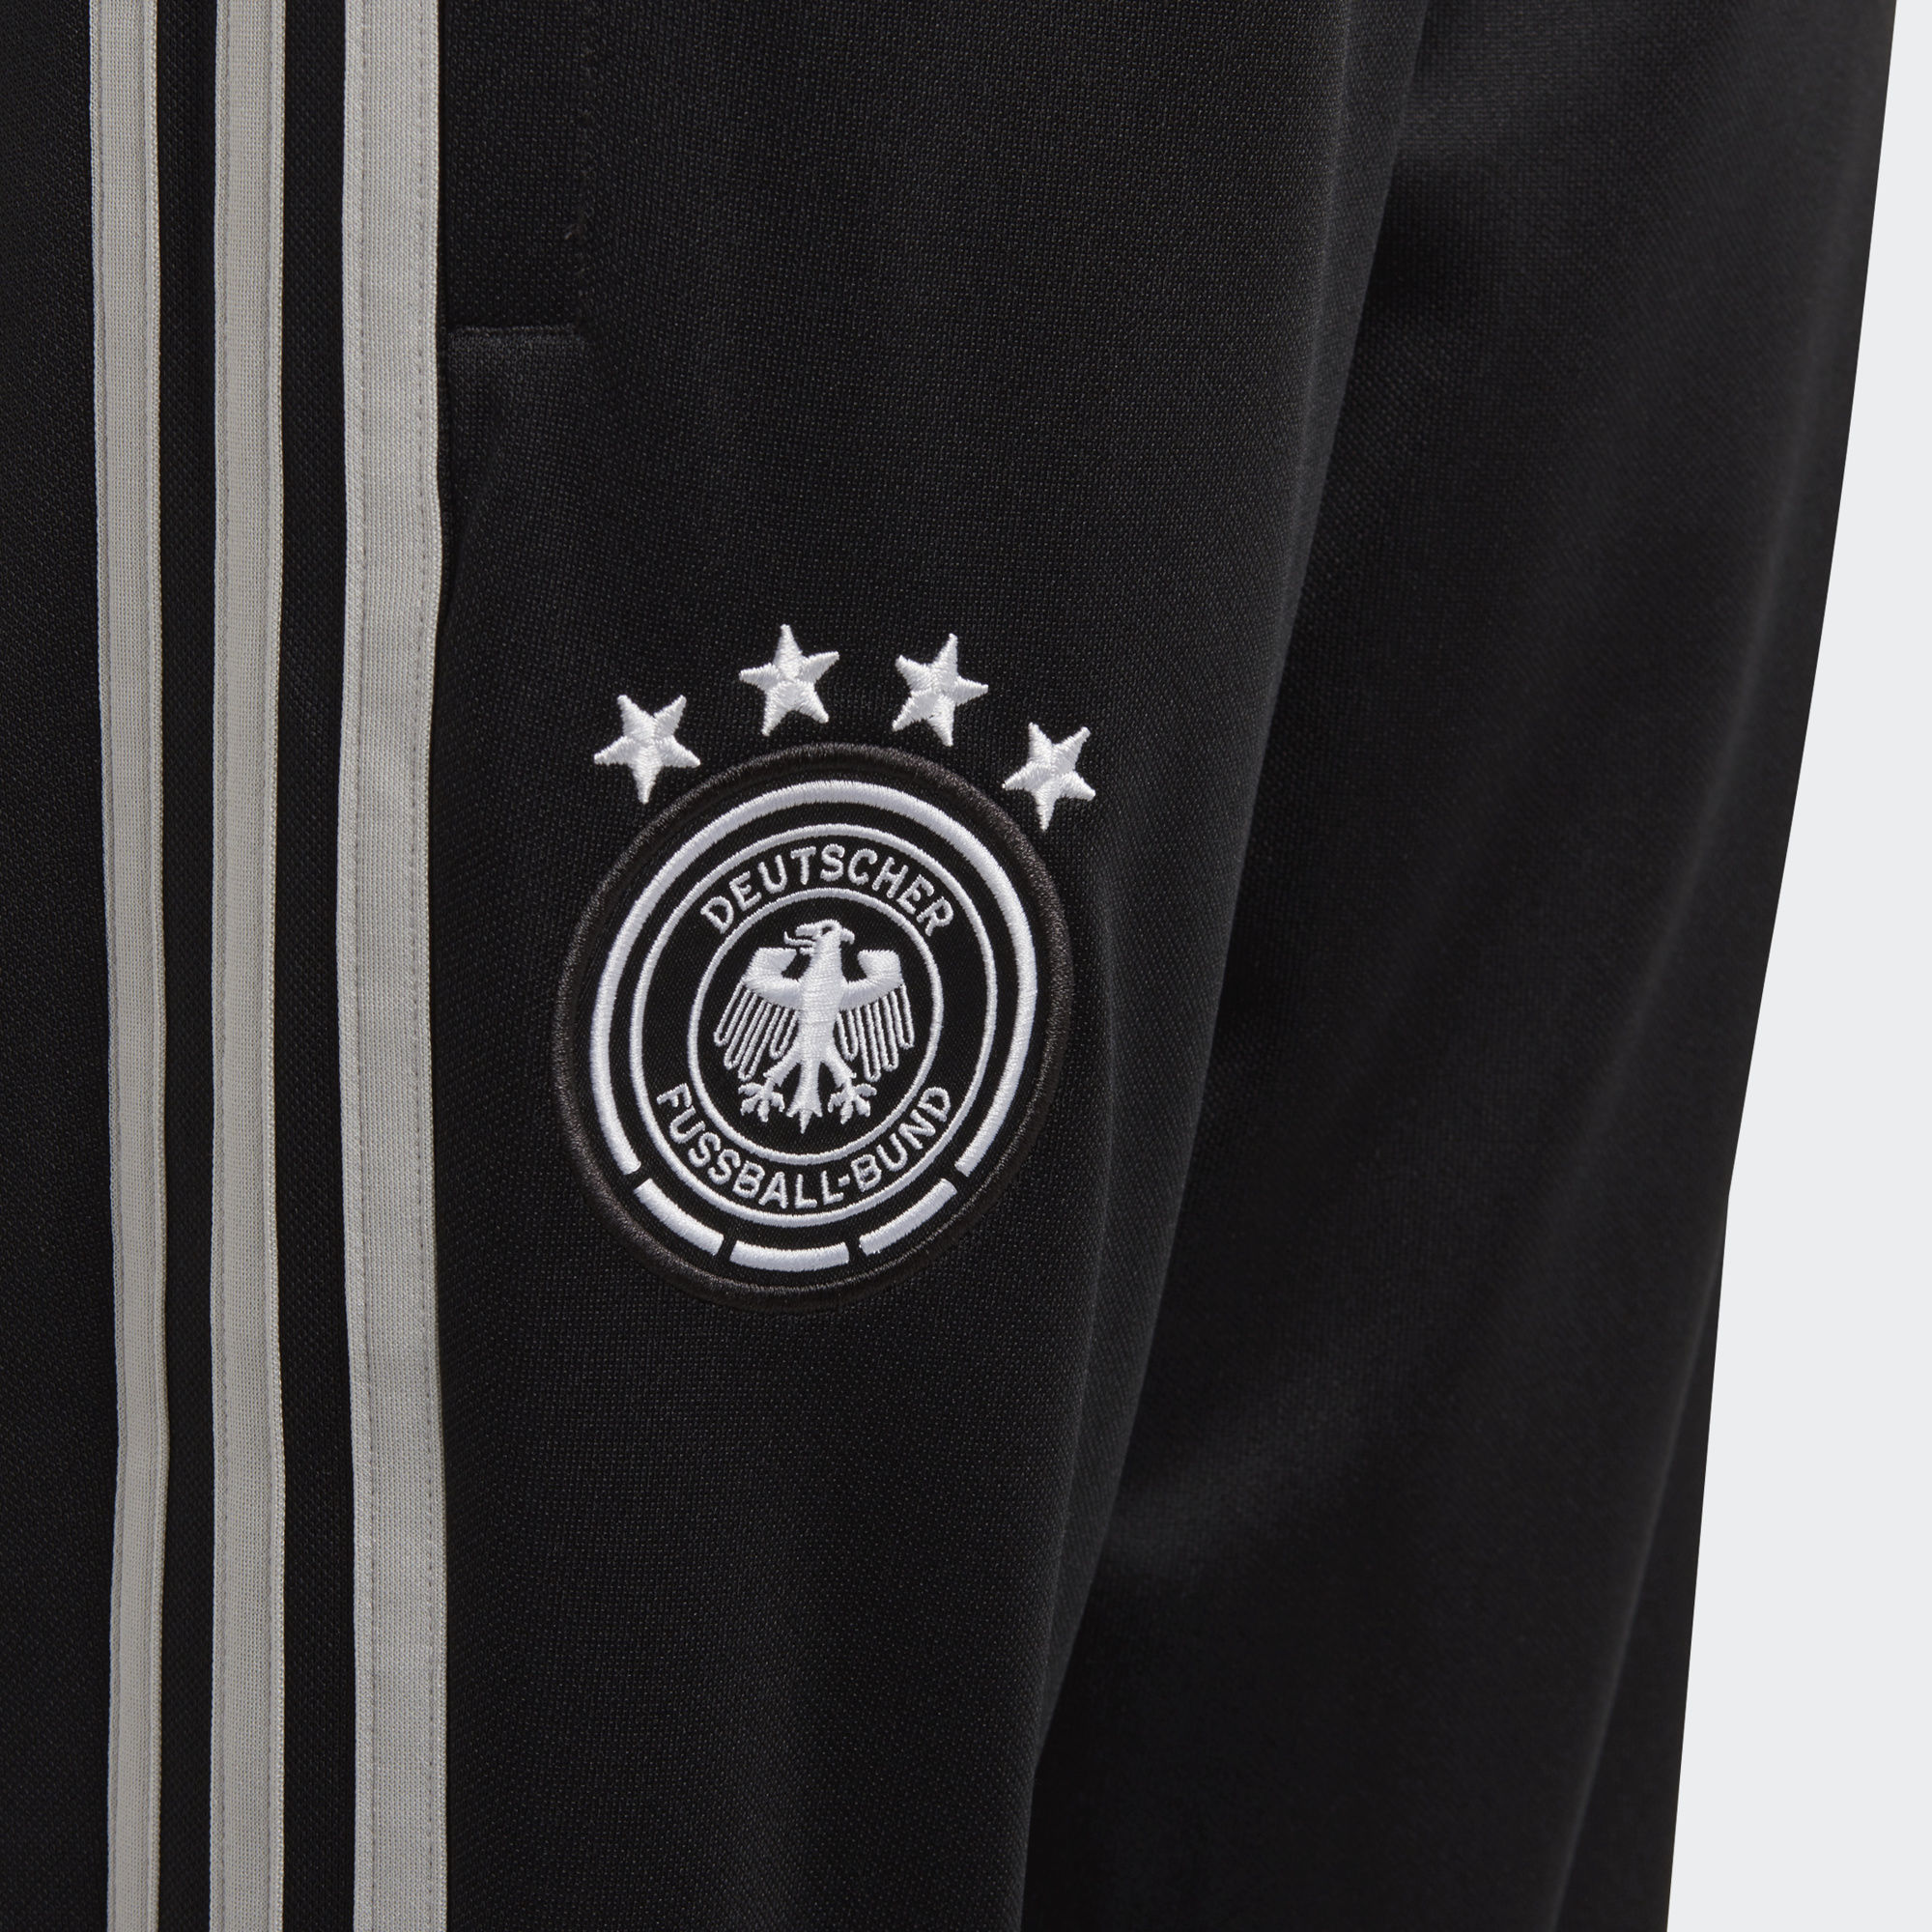 Адидас сборная германии. Брюки adidas DFB. Adidas Training Pants Germany. Adidas DFB костюм. Штаны адидас Ювентус.